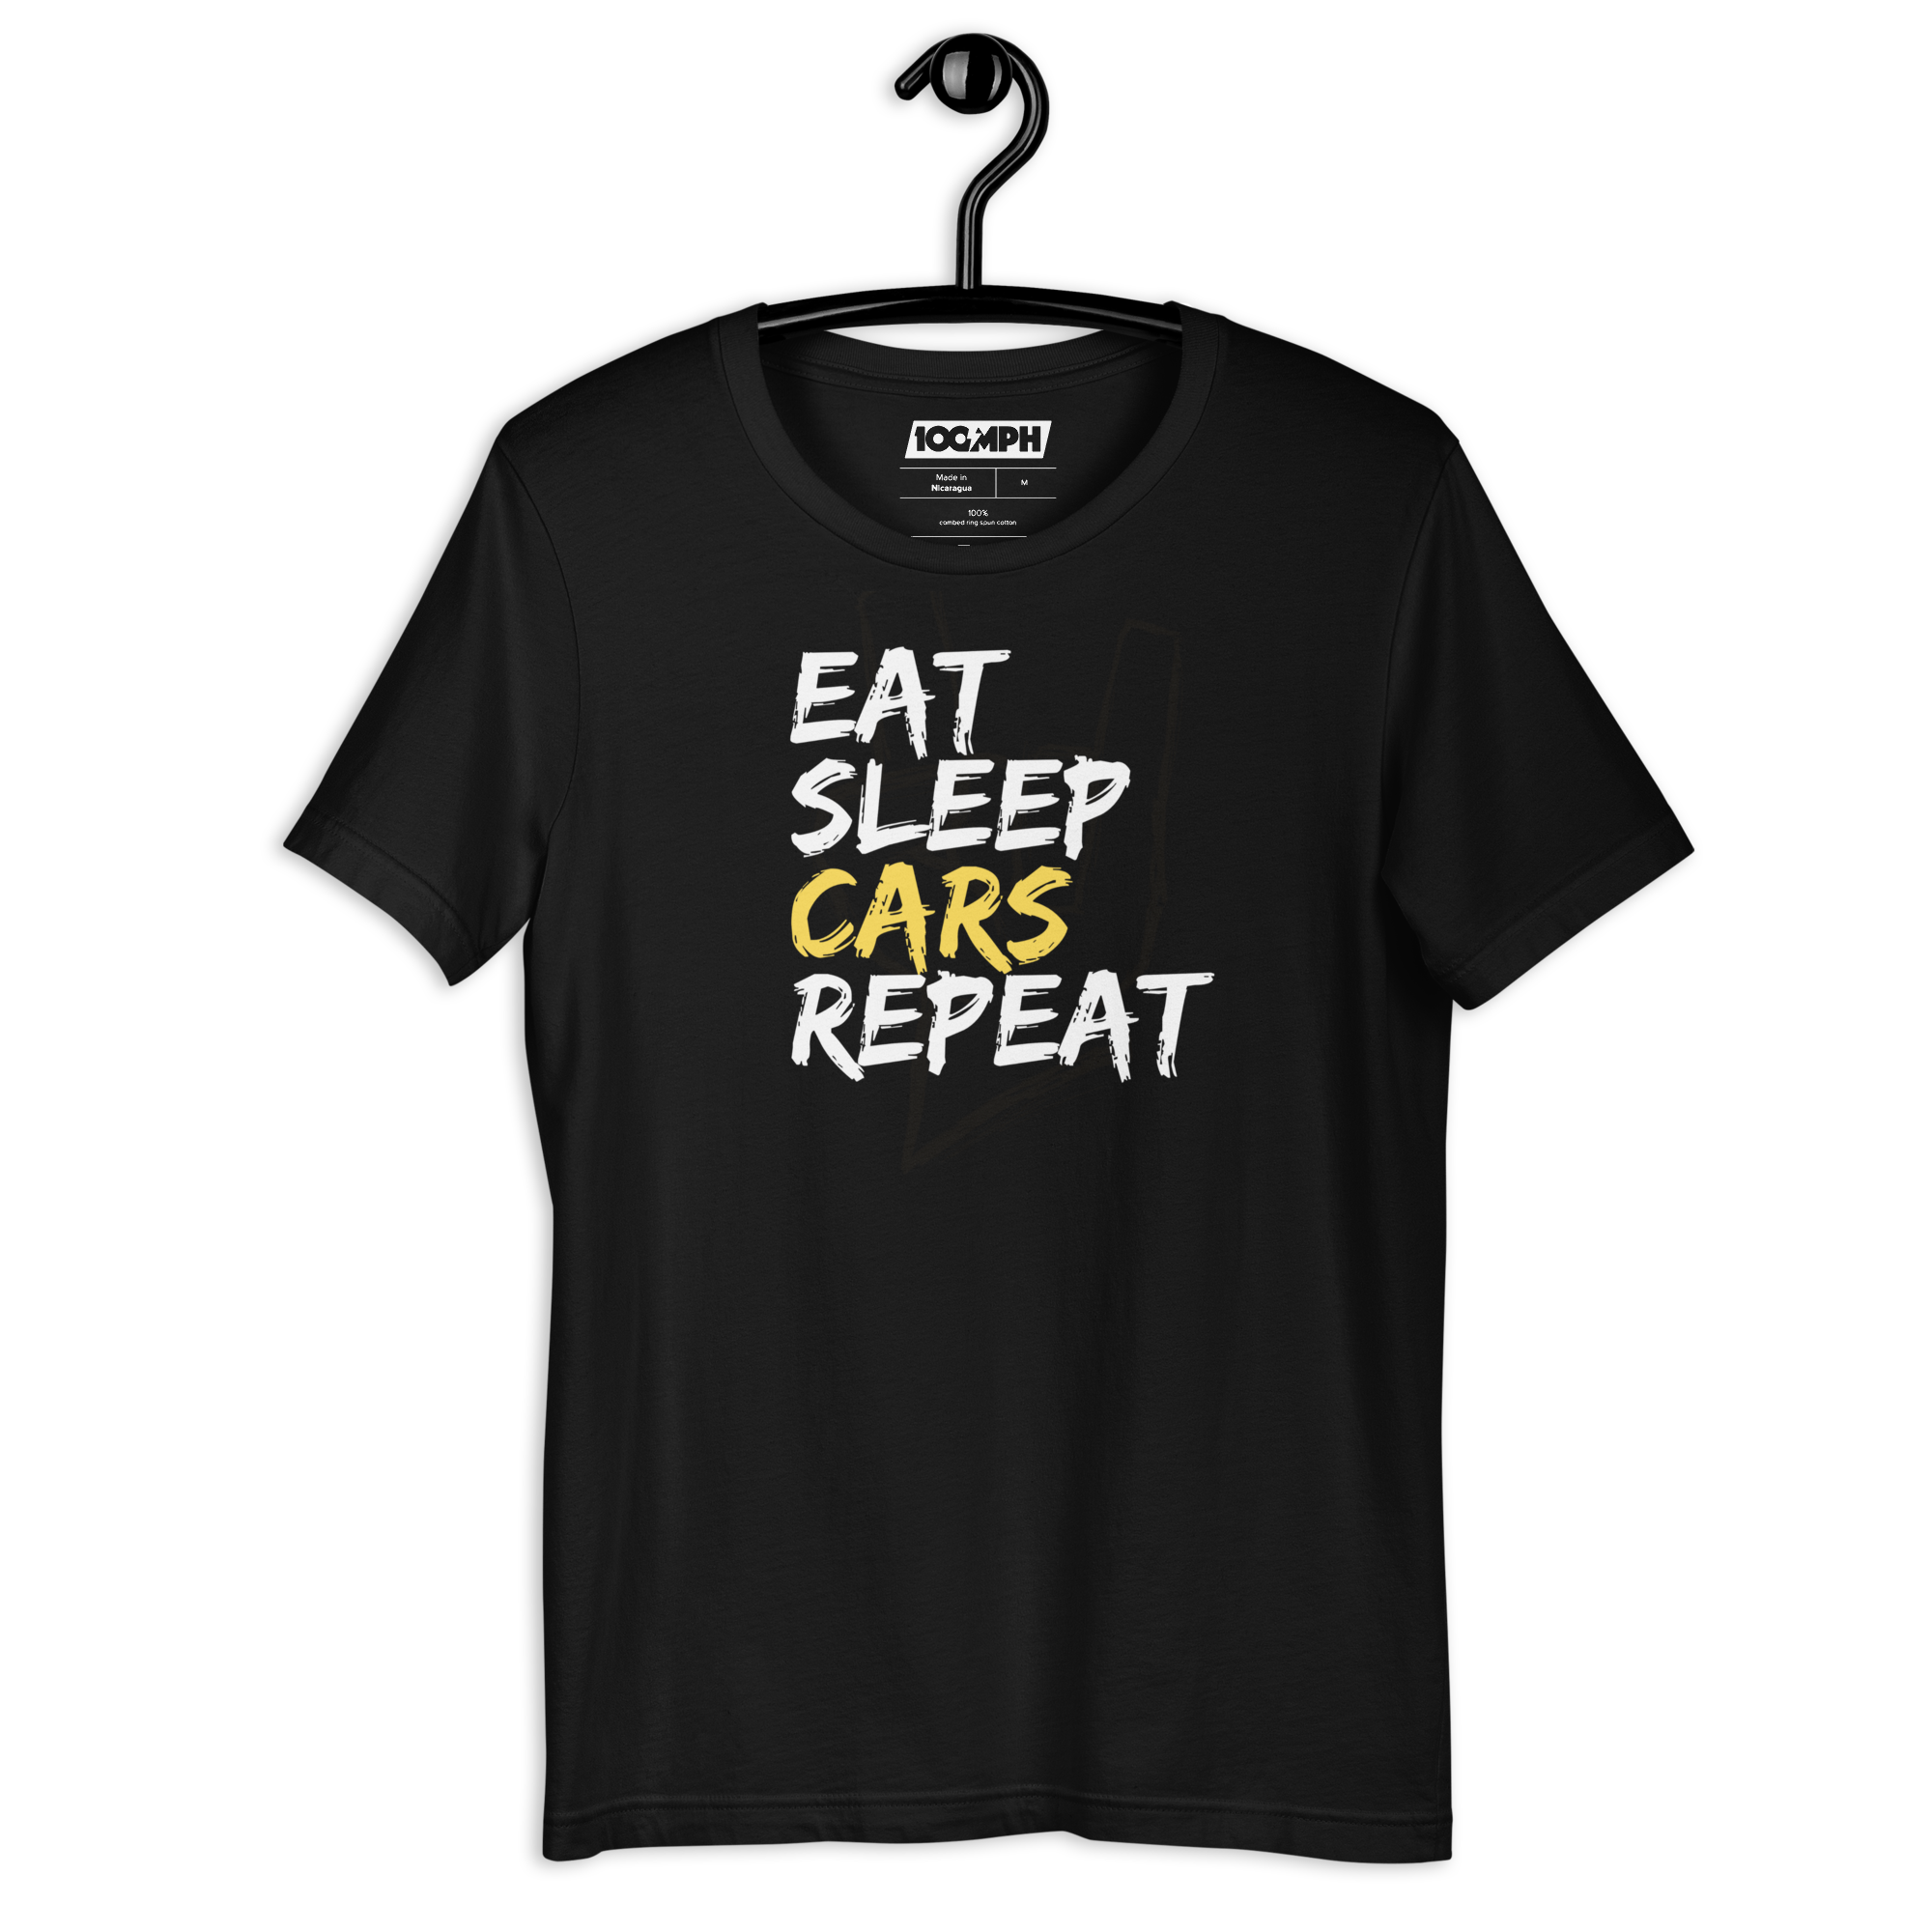 Eat. Sleep. Cars. Repeat